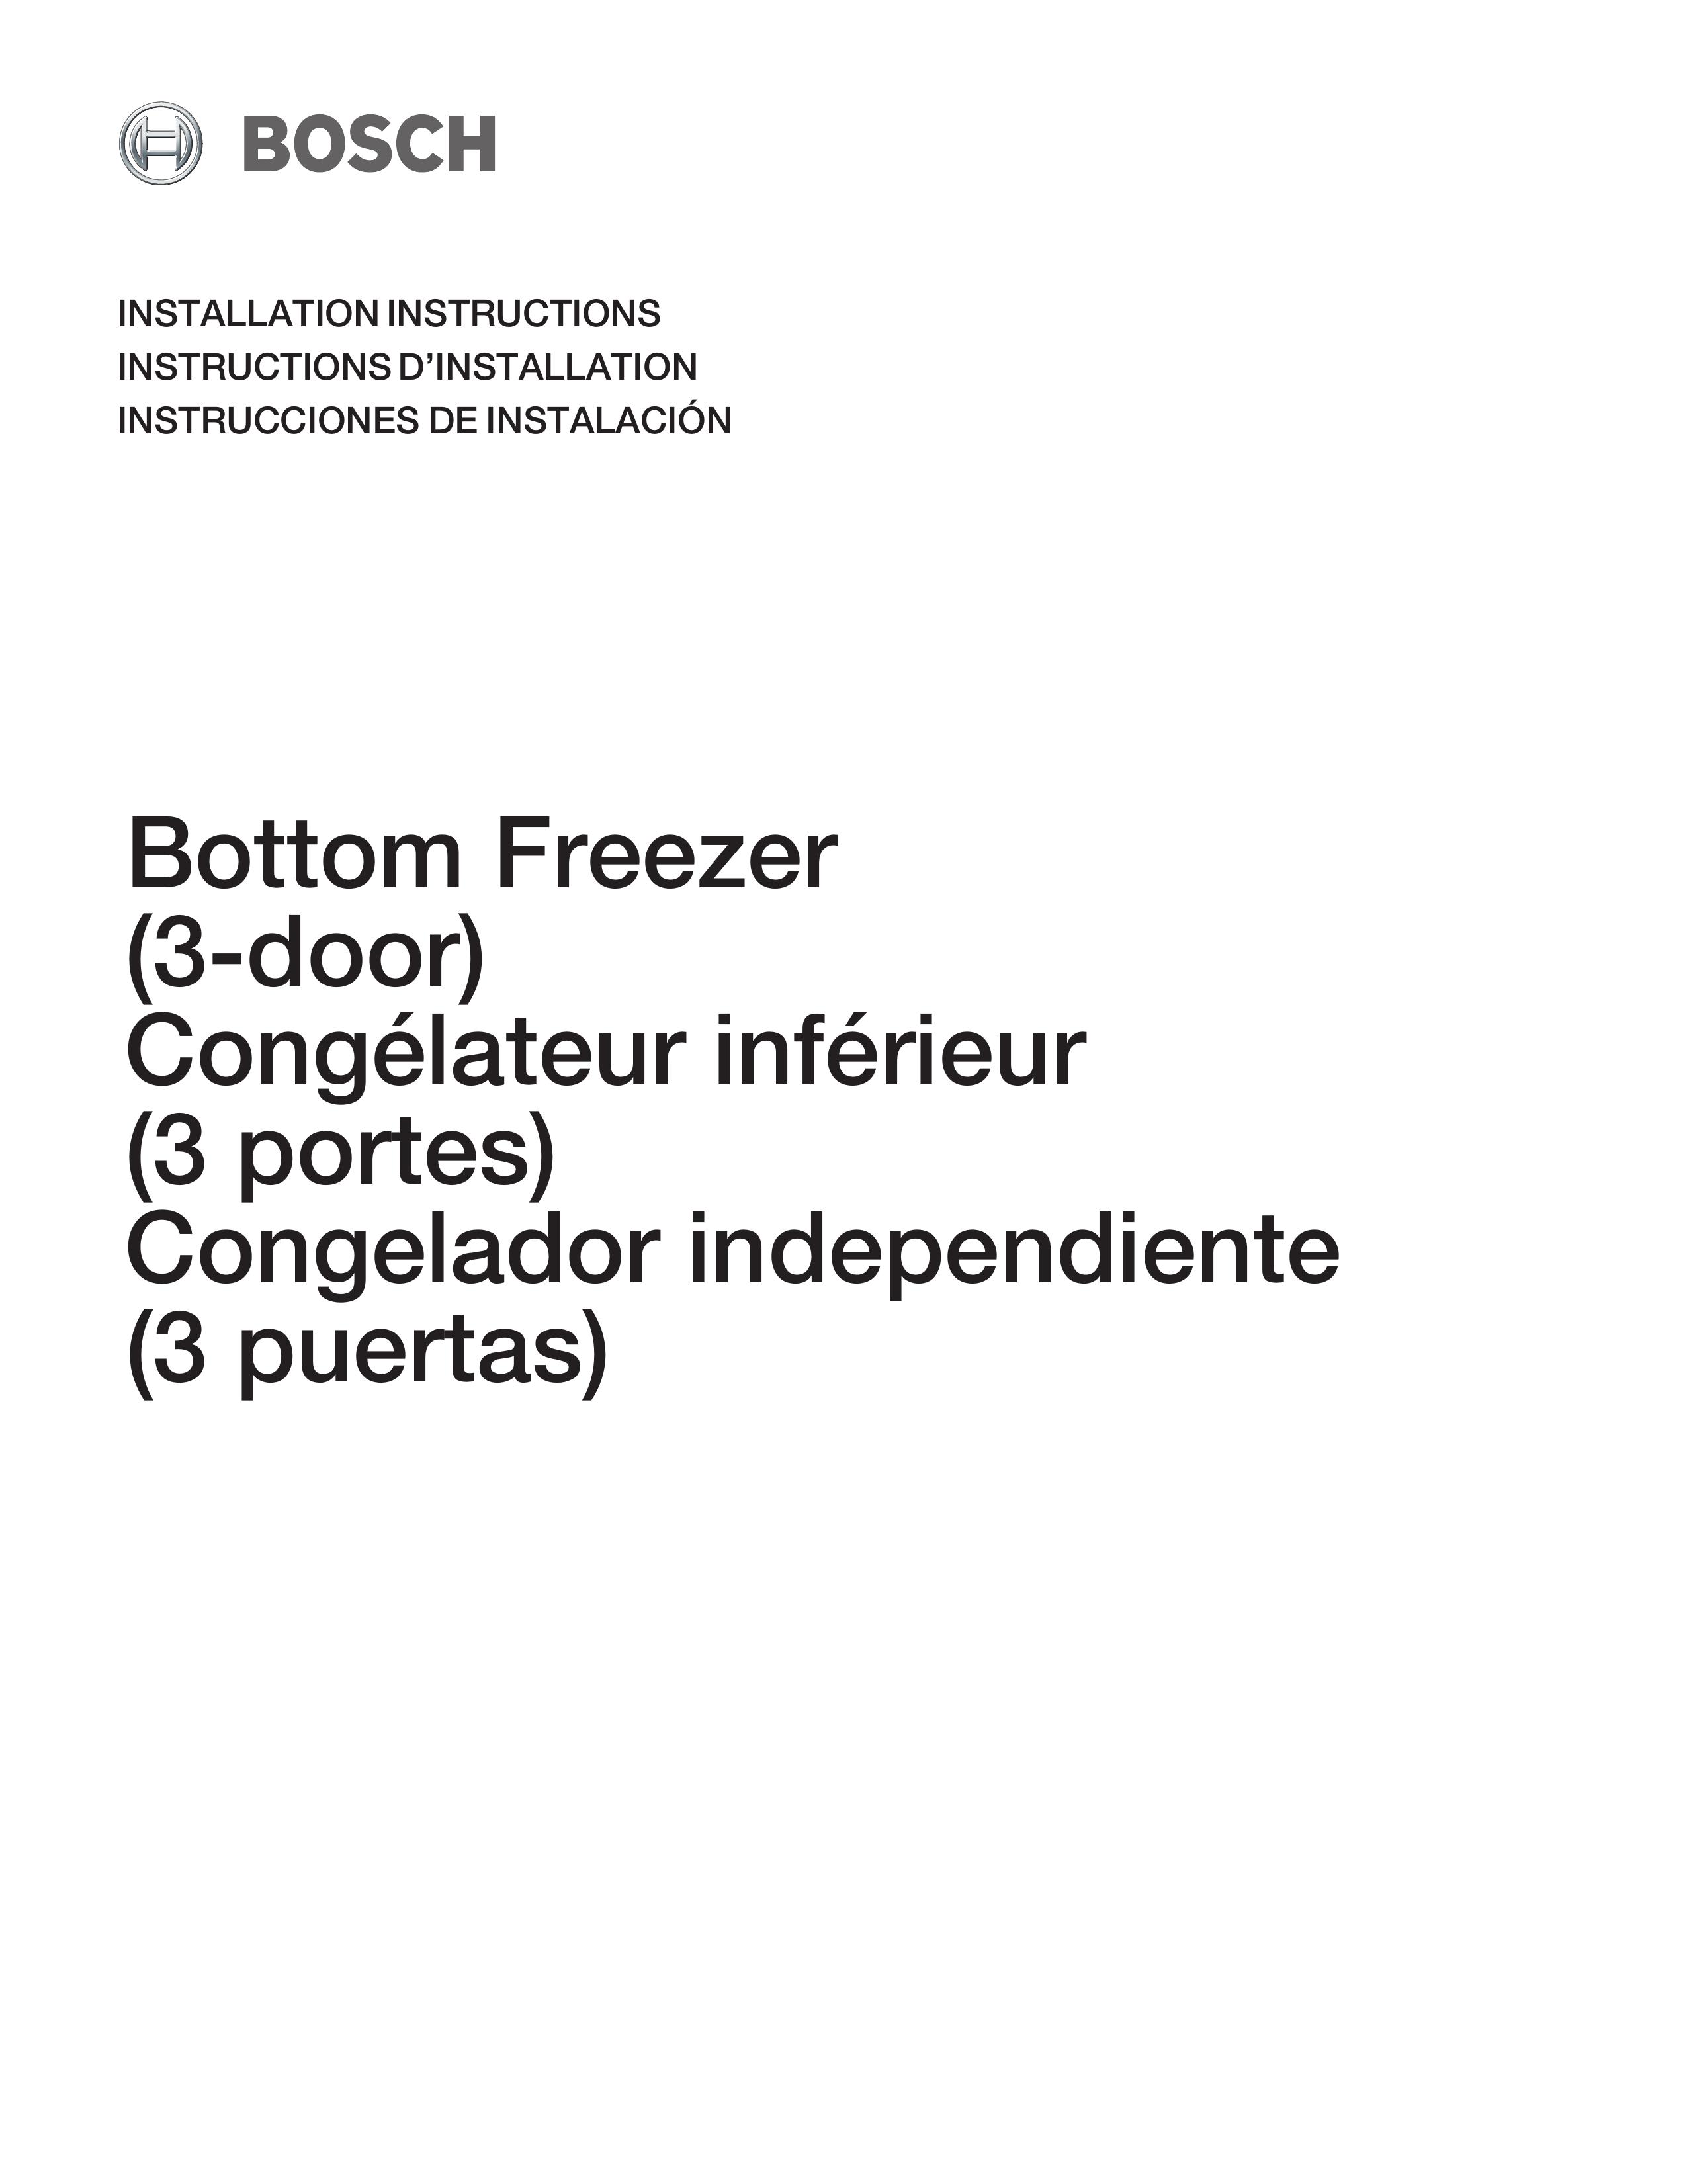 Bosch Appliances Bottom Freezer I Refrigerator User Manual